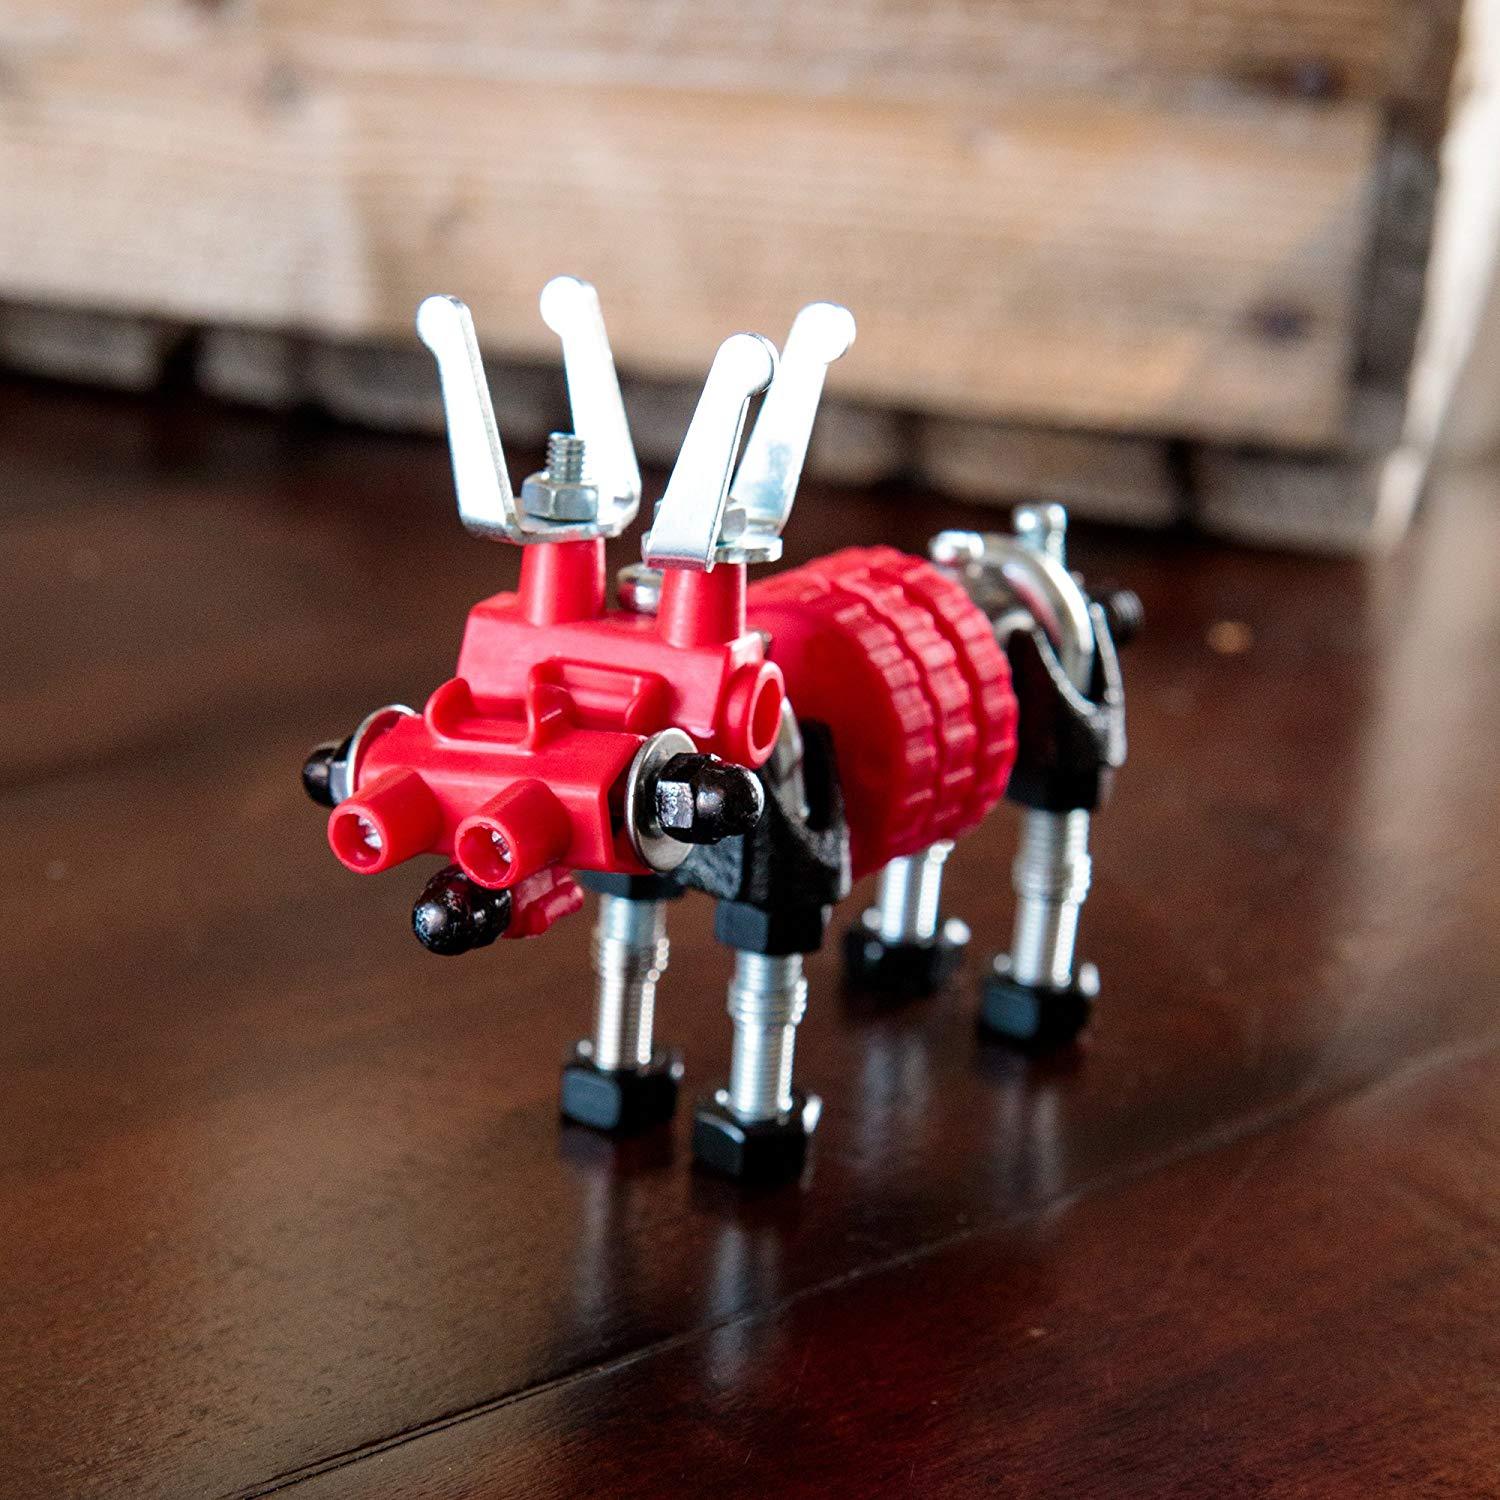 Fat Brain Toys OffBits Moose